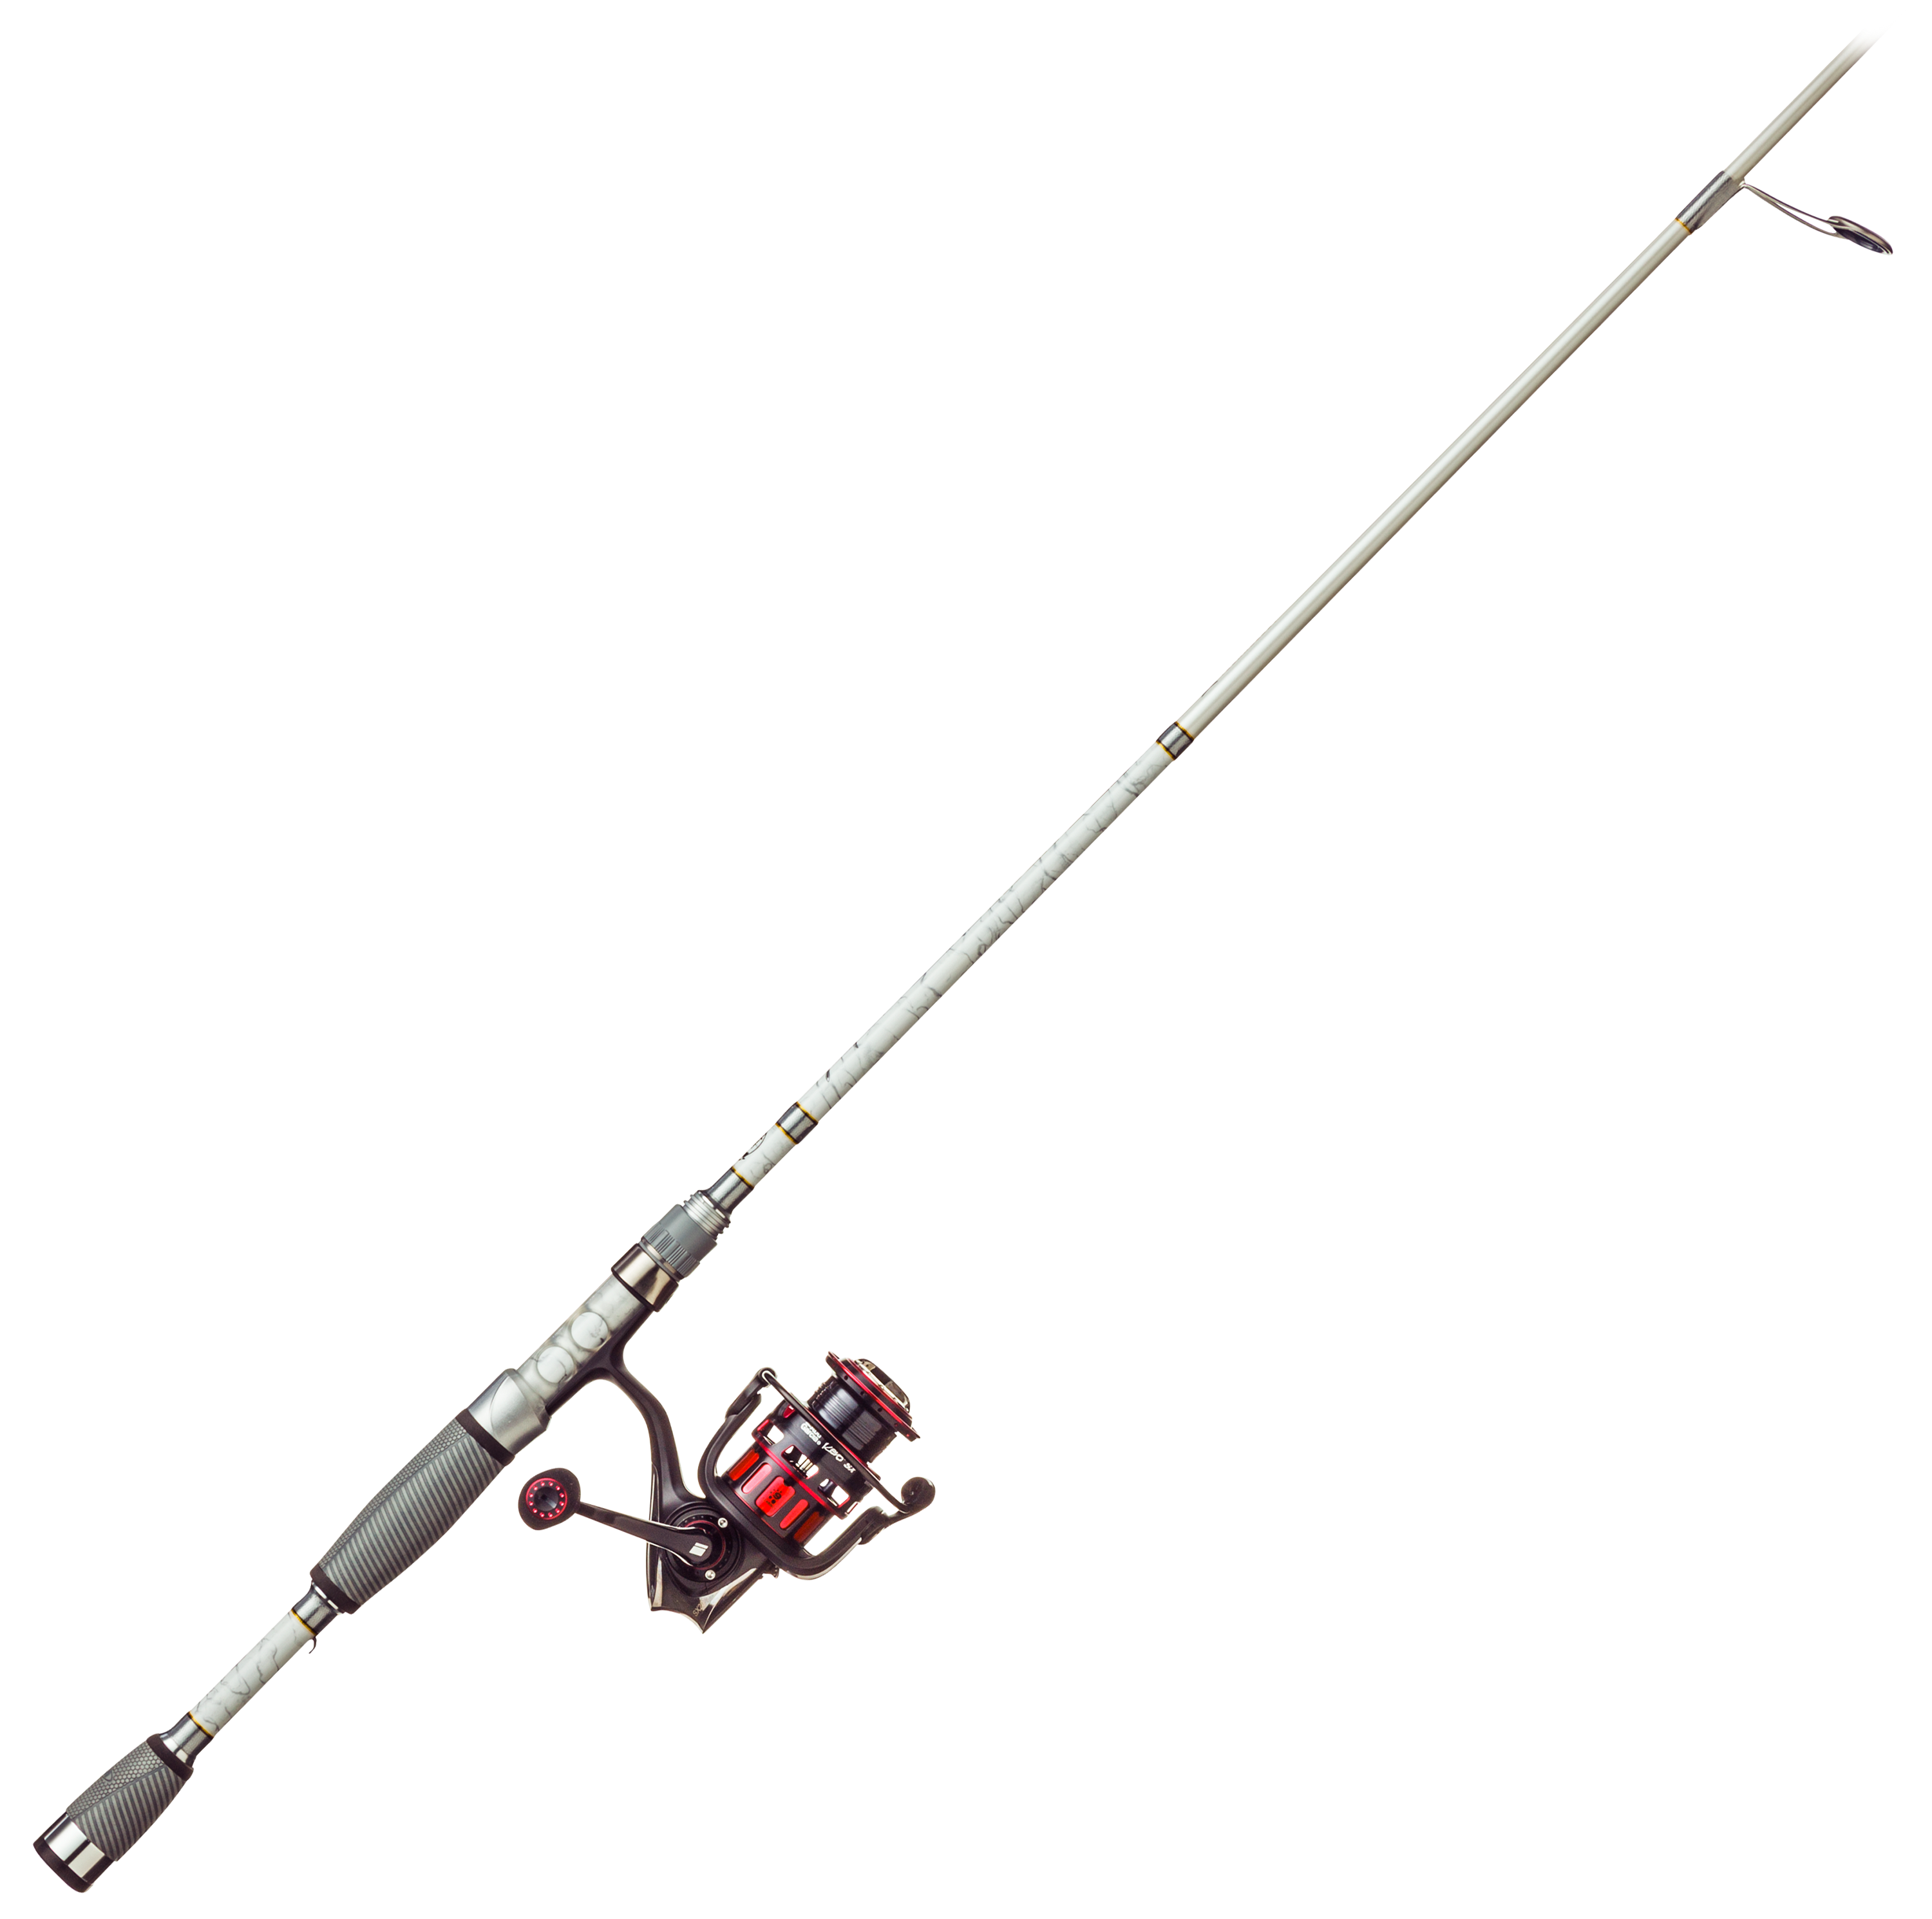 Abu Garcia Revo SX/Bass Pro Shops Johnny Morris CarbonLite Spinning Rod and Reel Combo - Model REVO2SX20/JCT66MSF